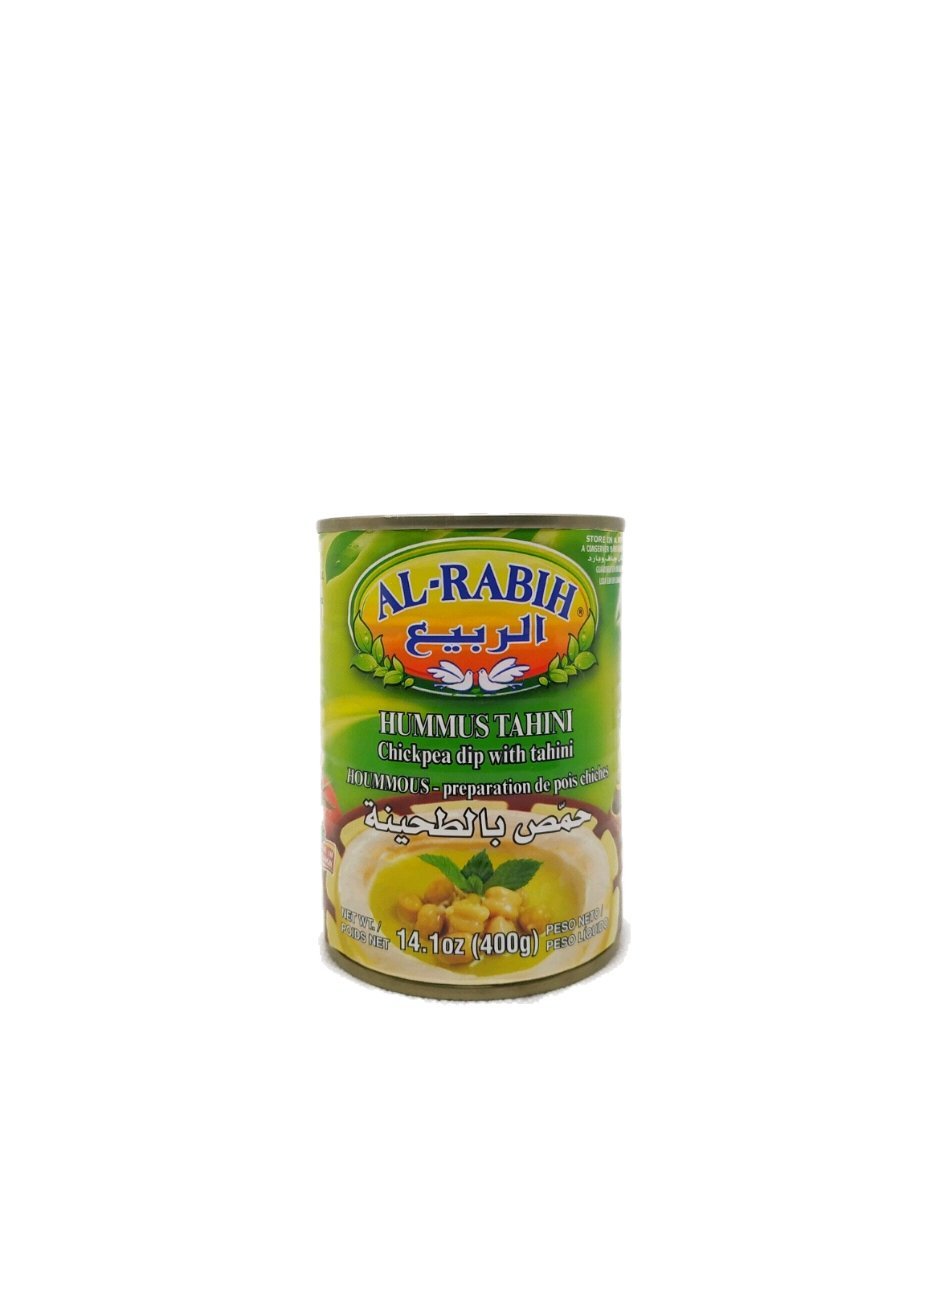 Produits orientaux en ligne : Al Rabih - Hummus tahini